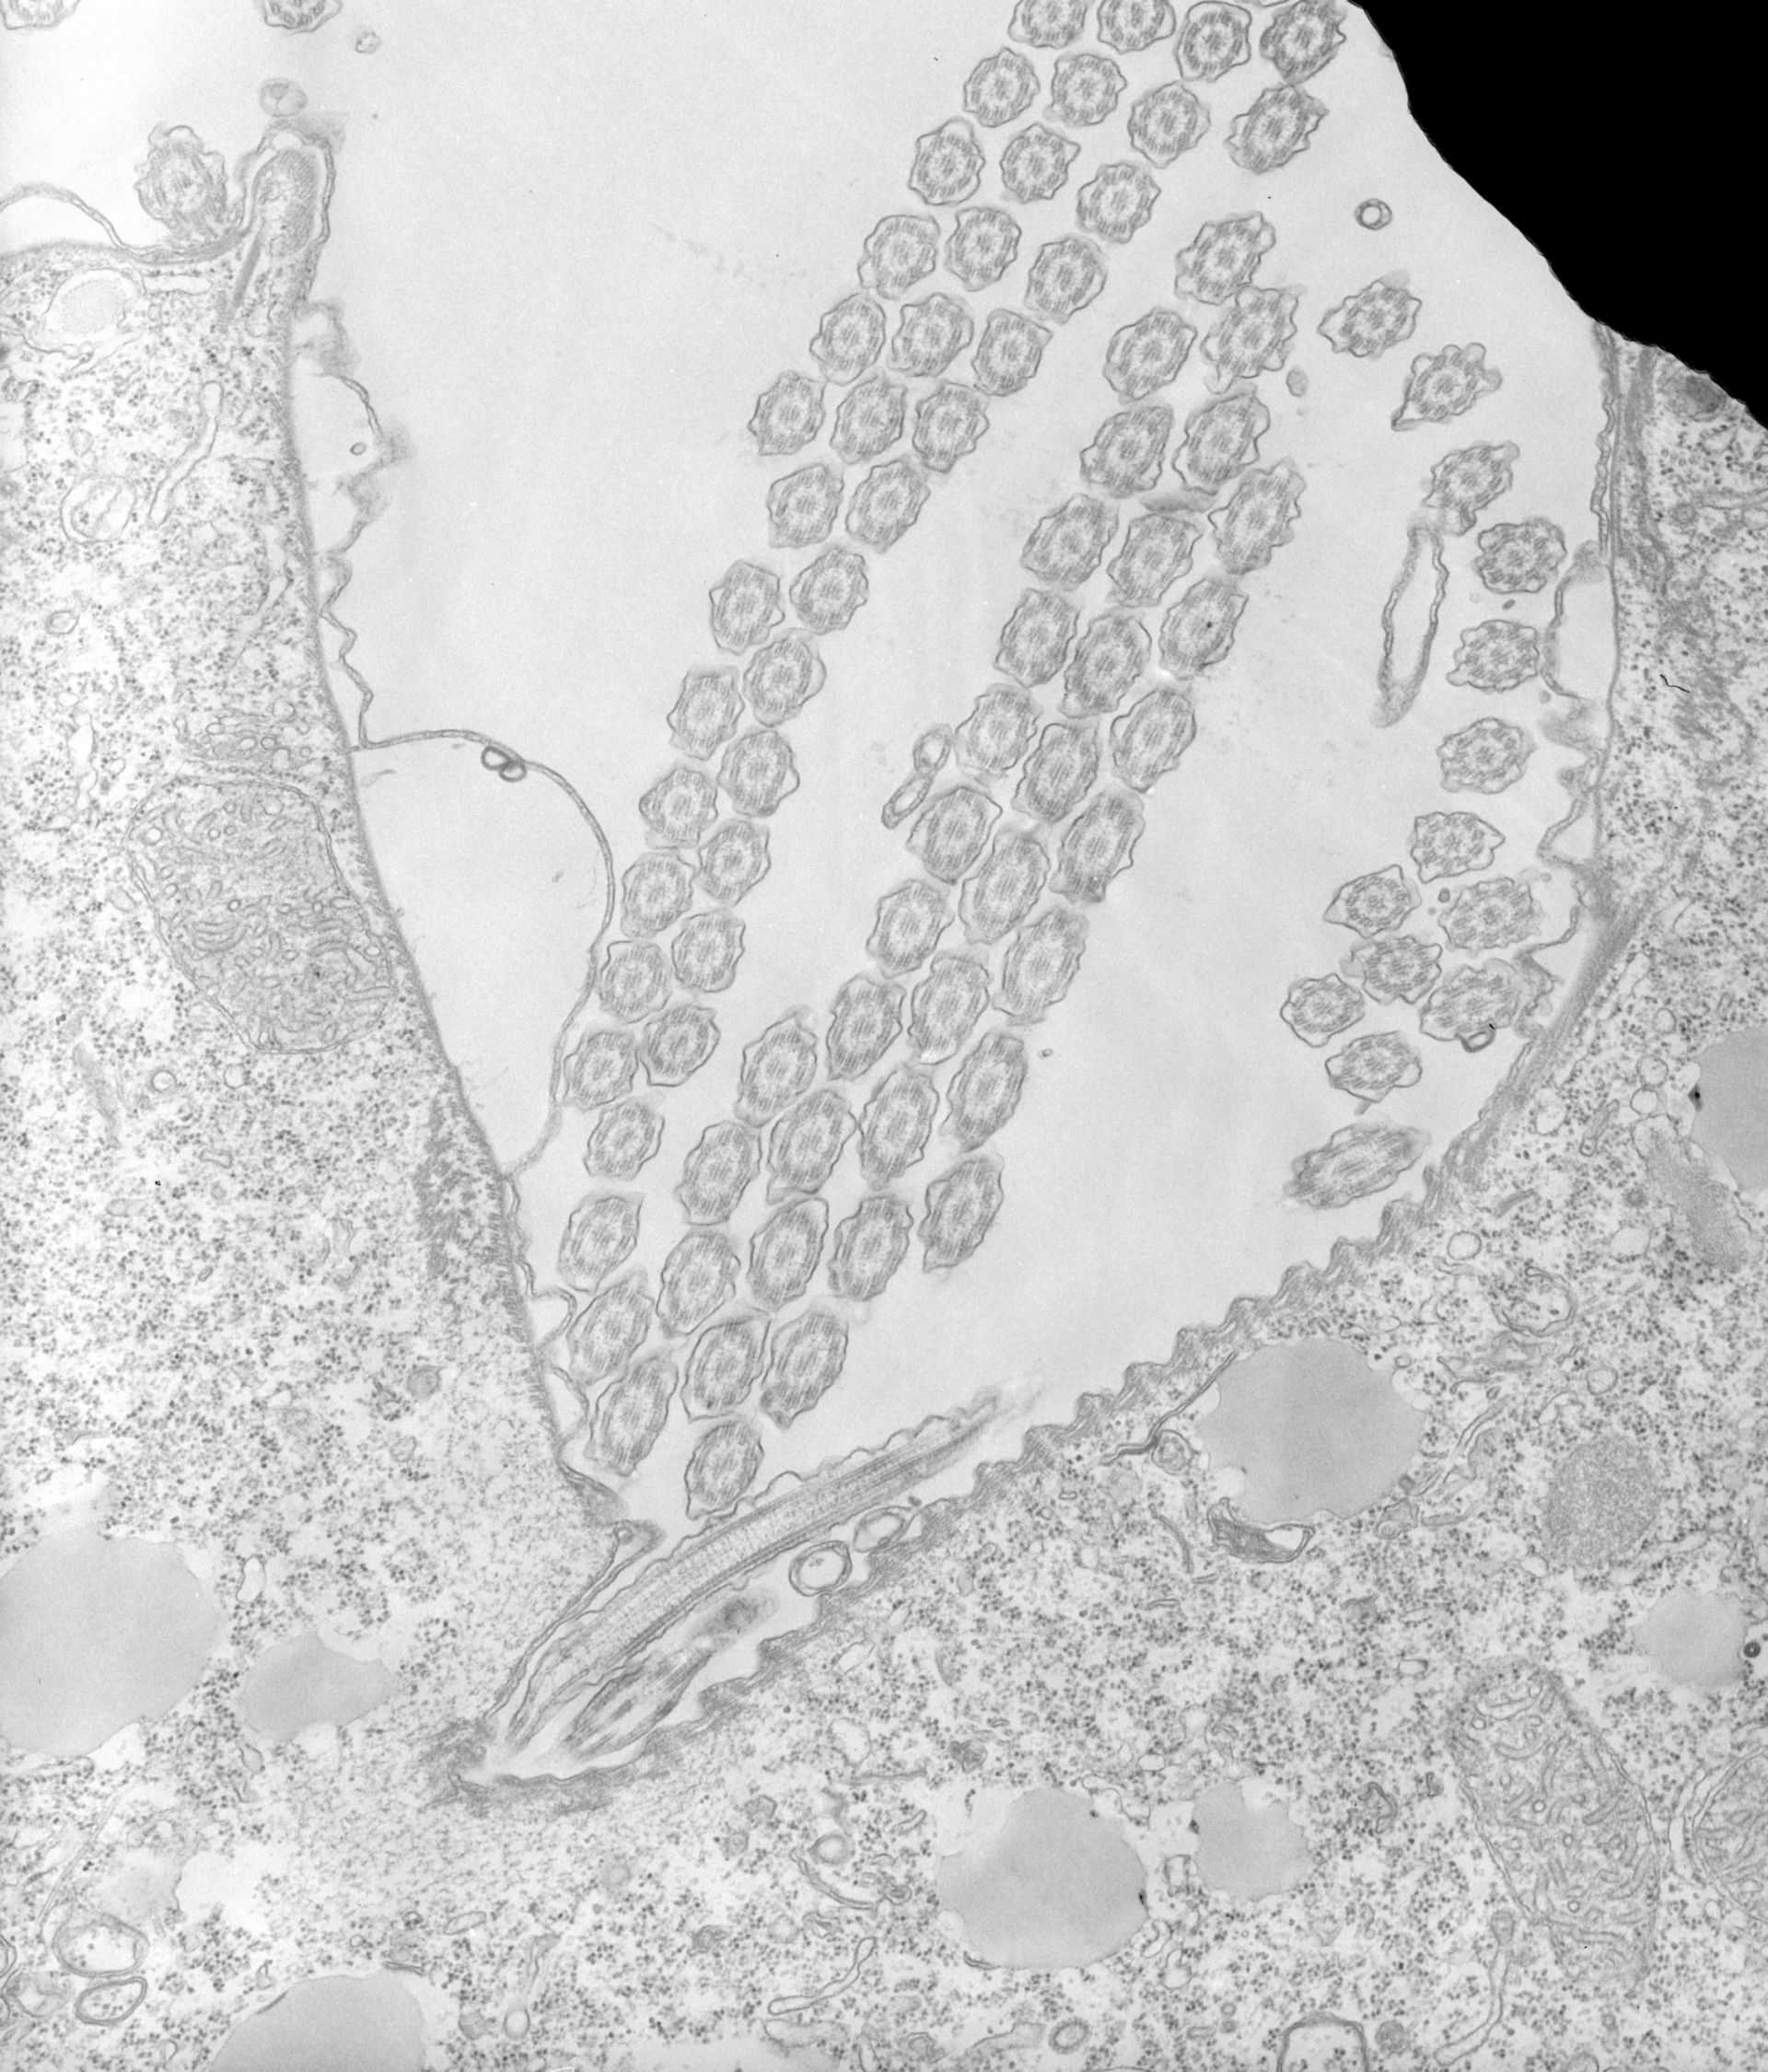 Tetrahymena pyriformis (Plasma membrane) - CIL:34745